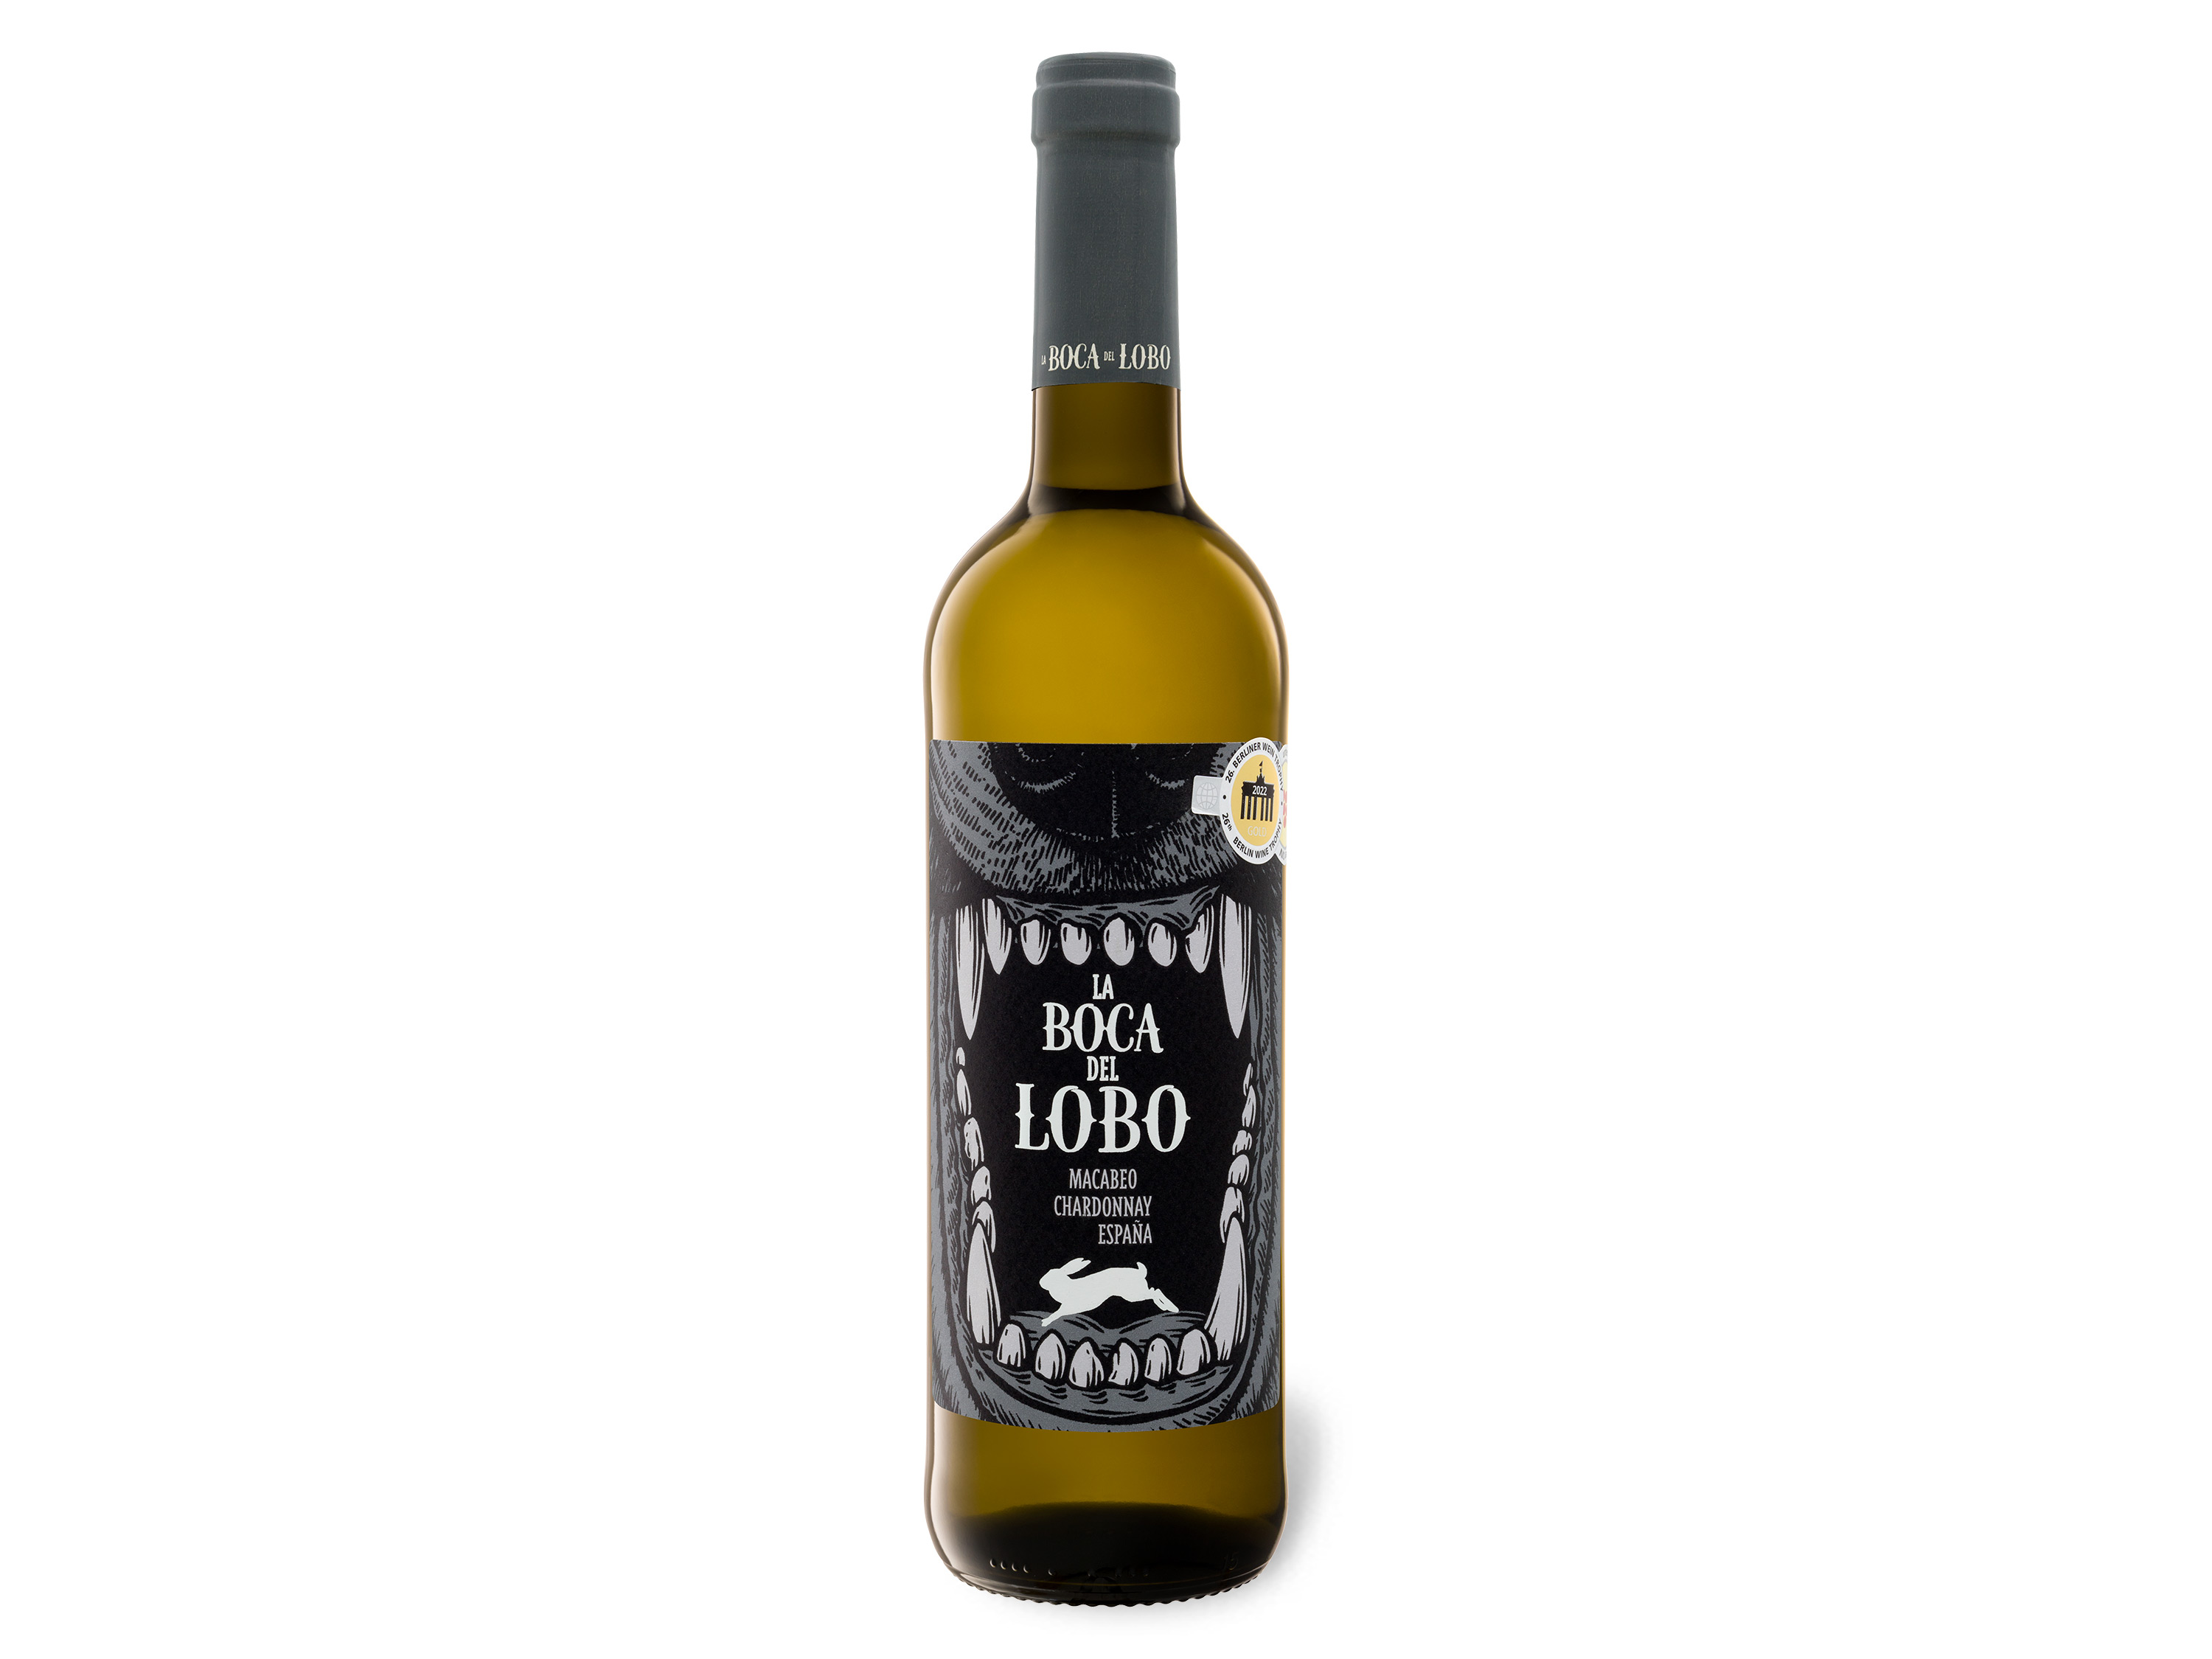 Vega Roja Airén-Verdejo Valdepeñas DO trocken, Weißwein 2021